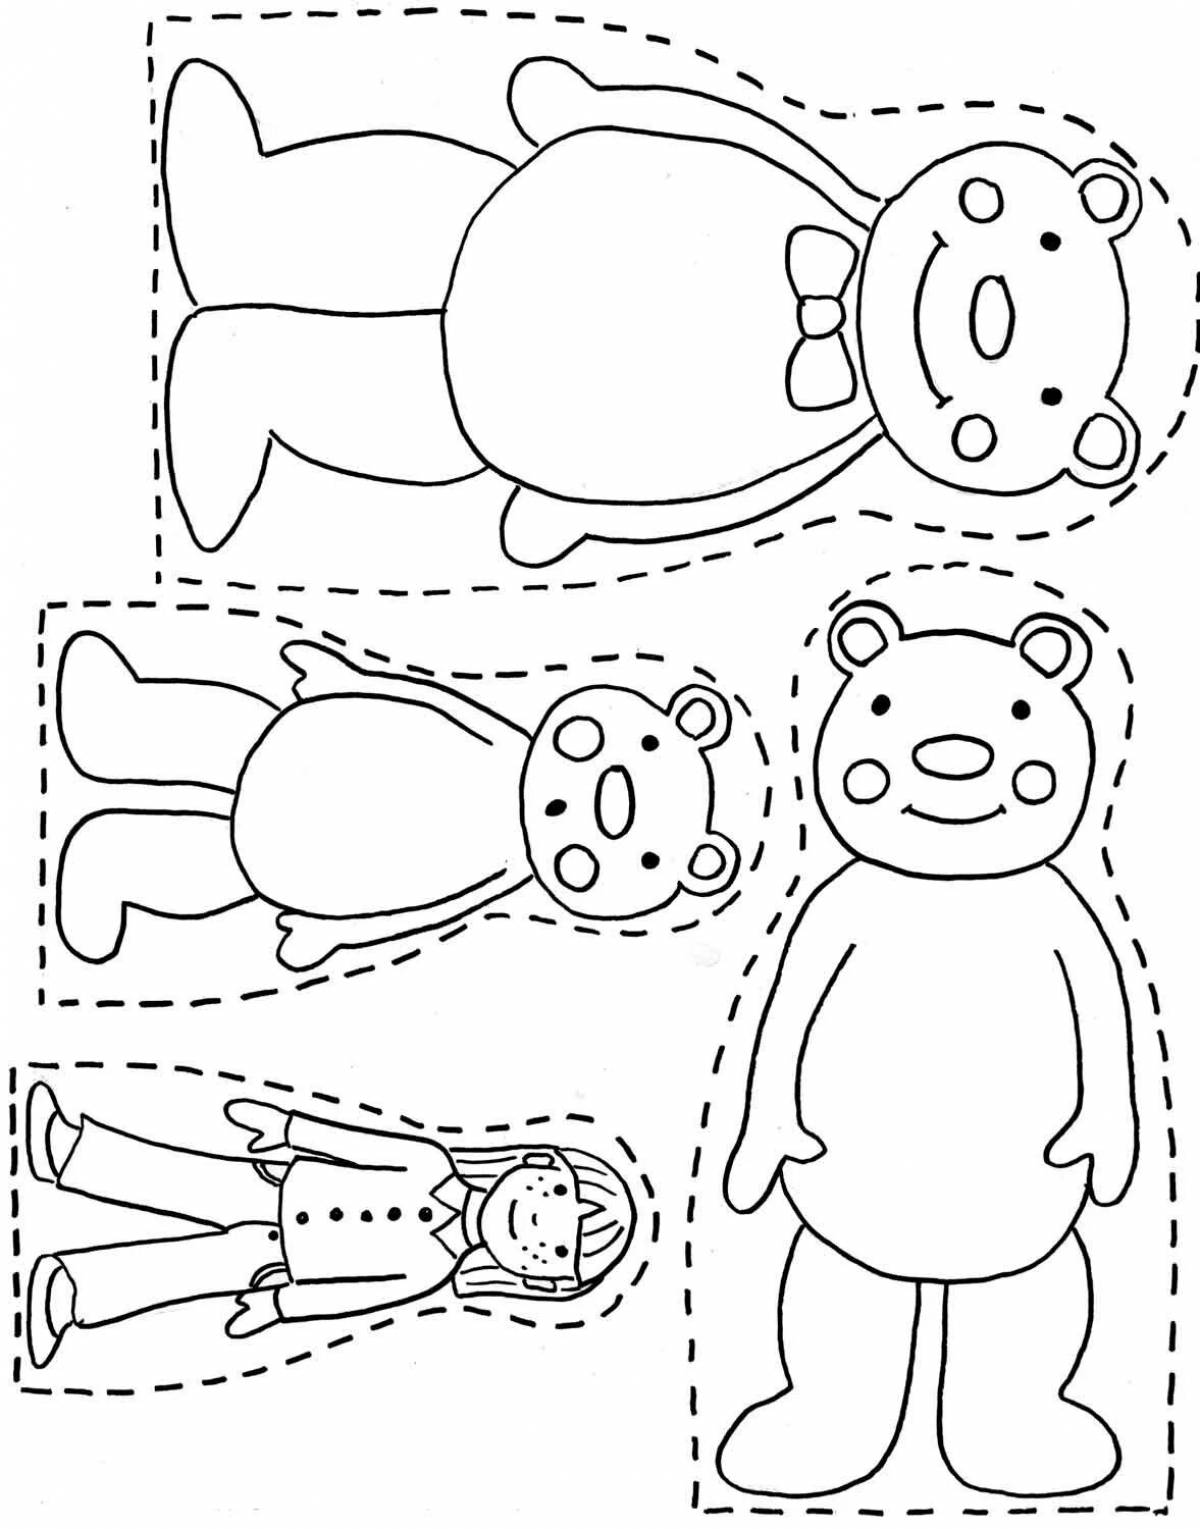 Three bears fun coloring for pre-k